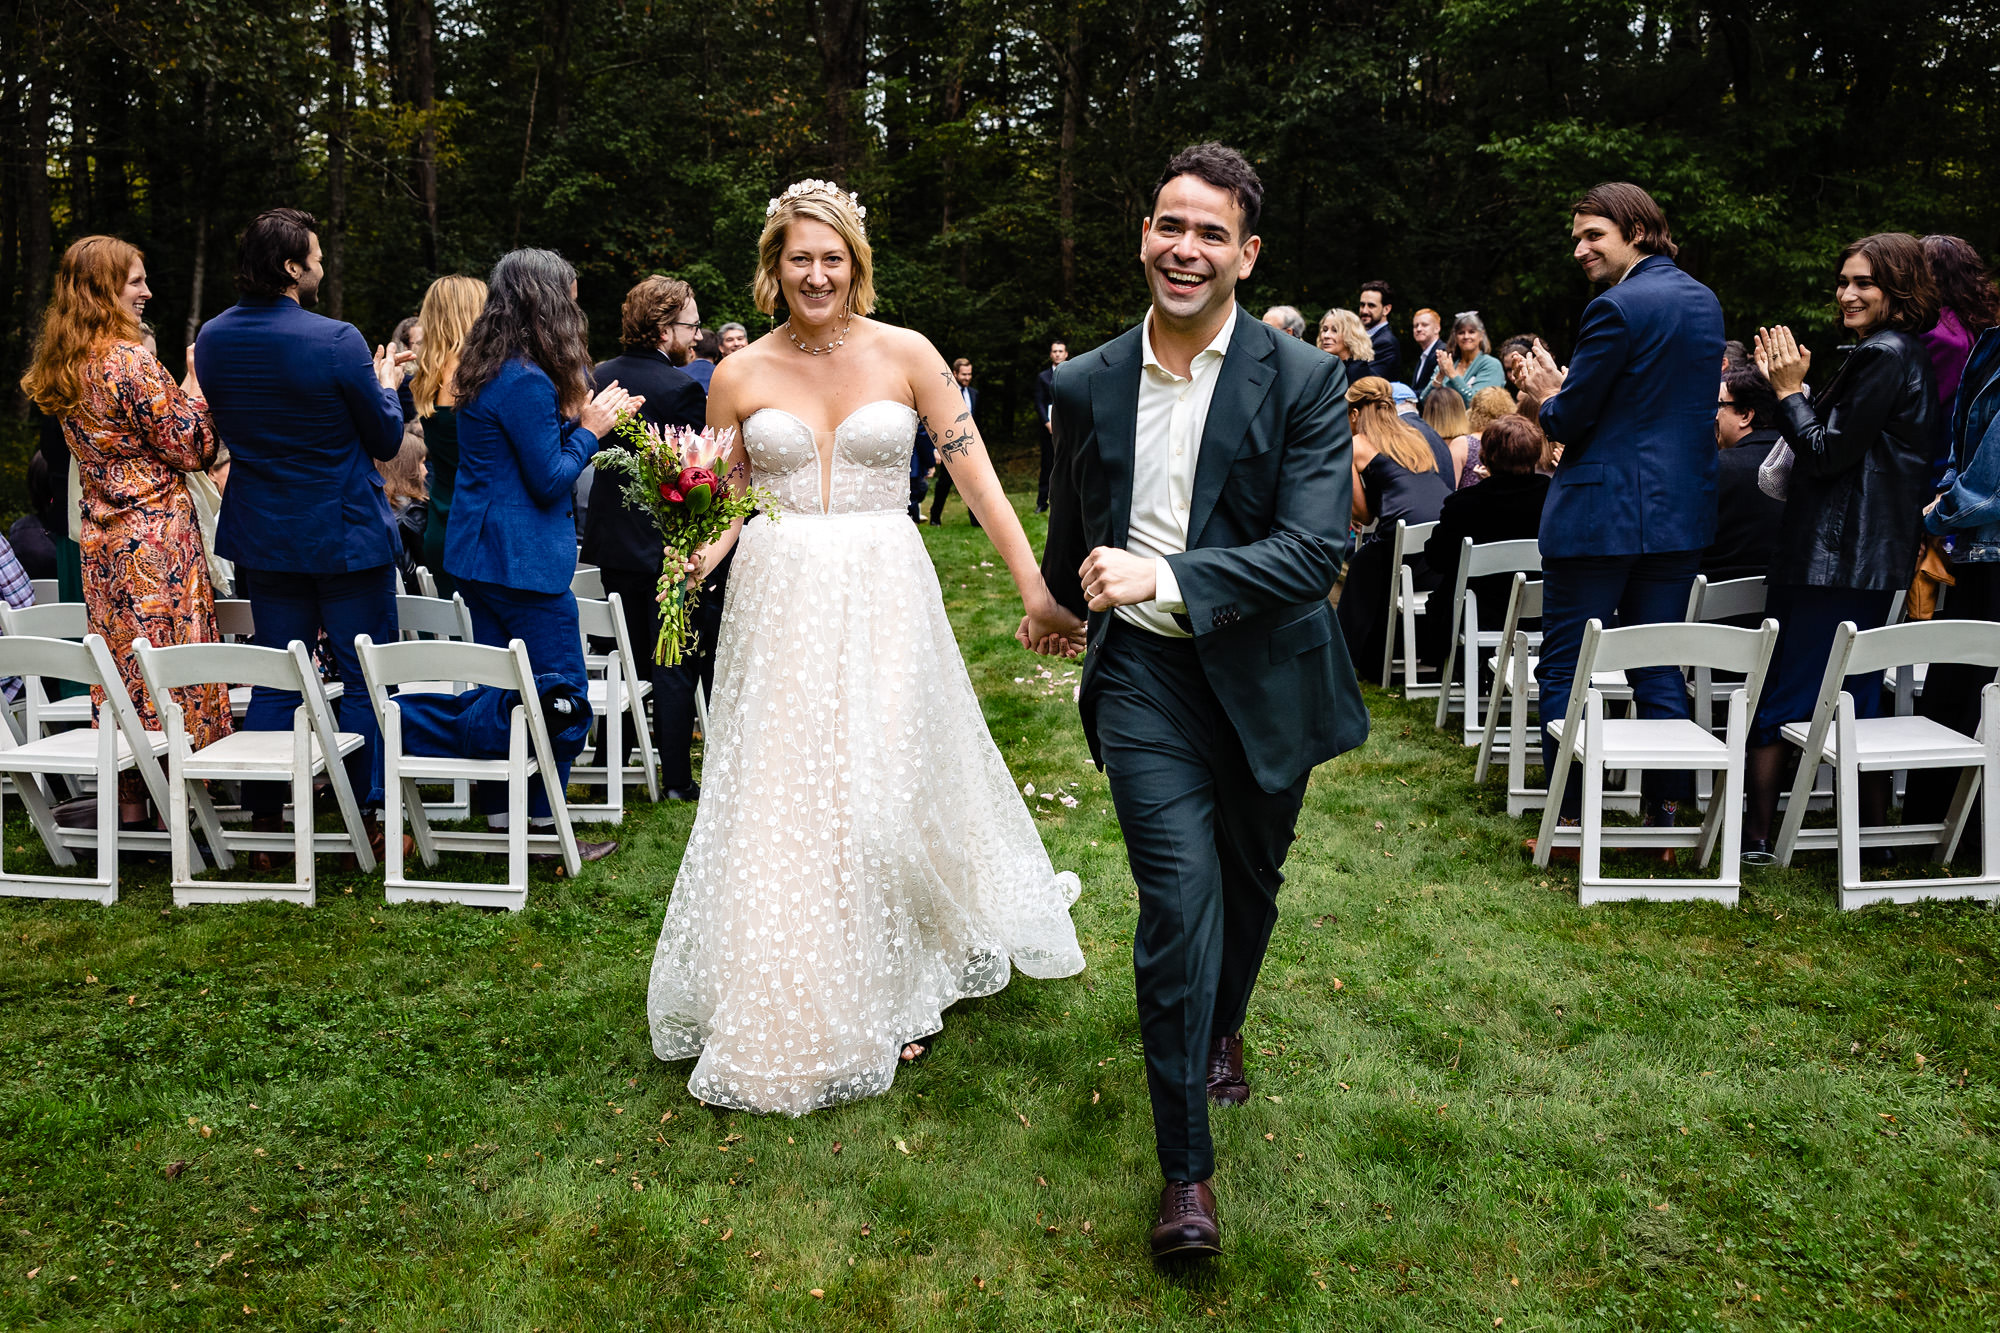 Colleen and Jared's Arrowheads Estate wedding in Cape Neddick, Maine